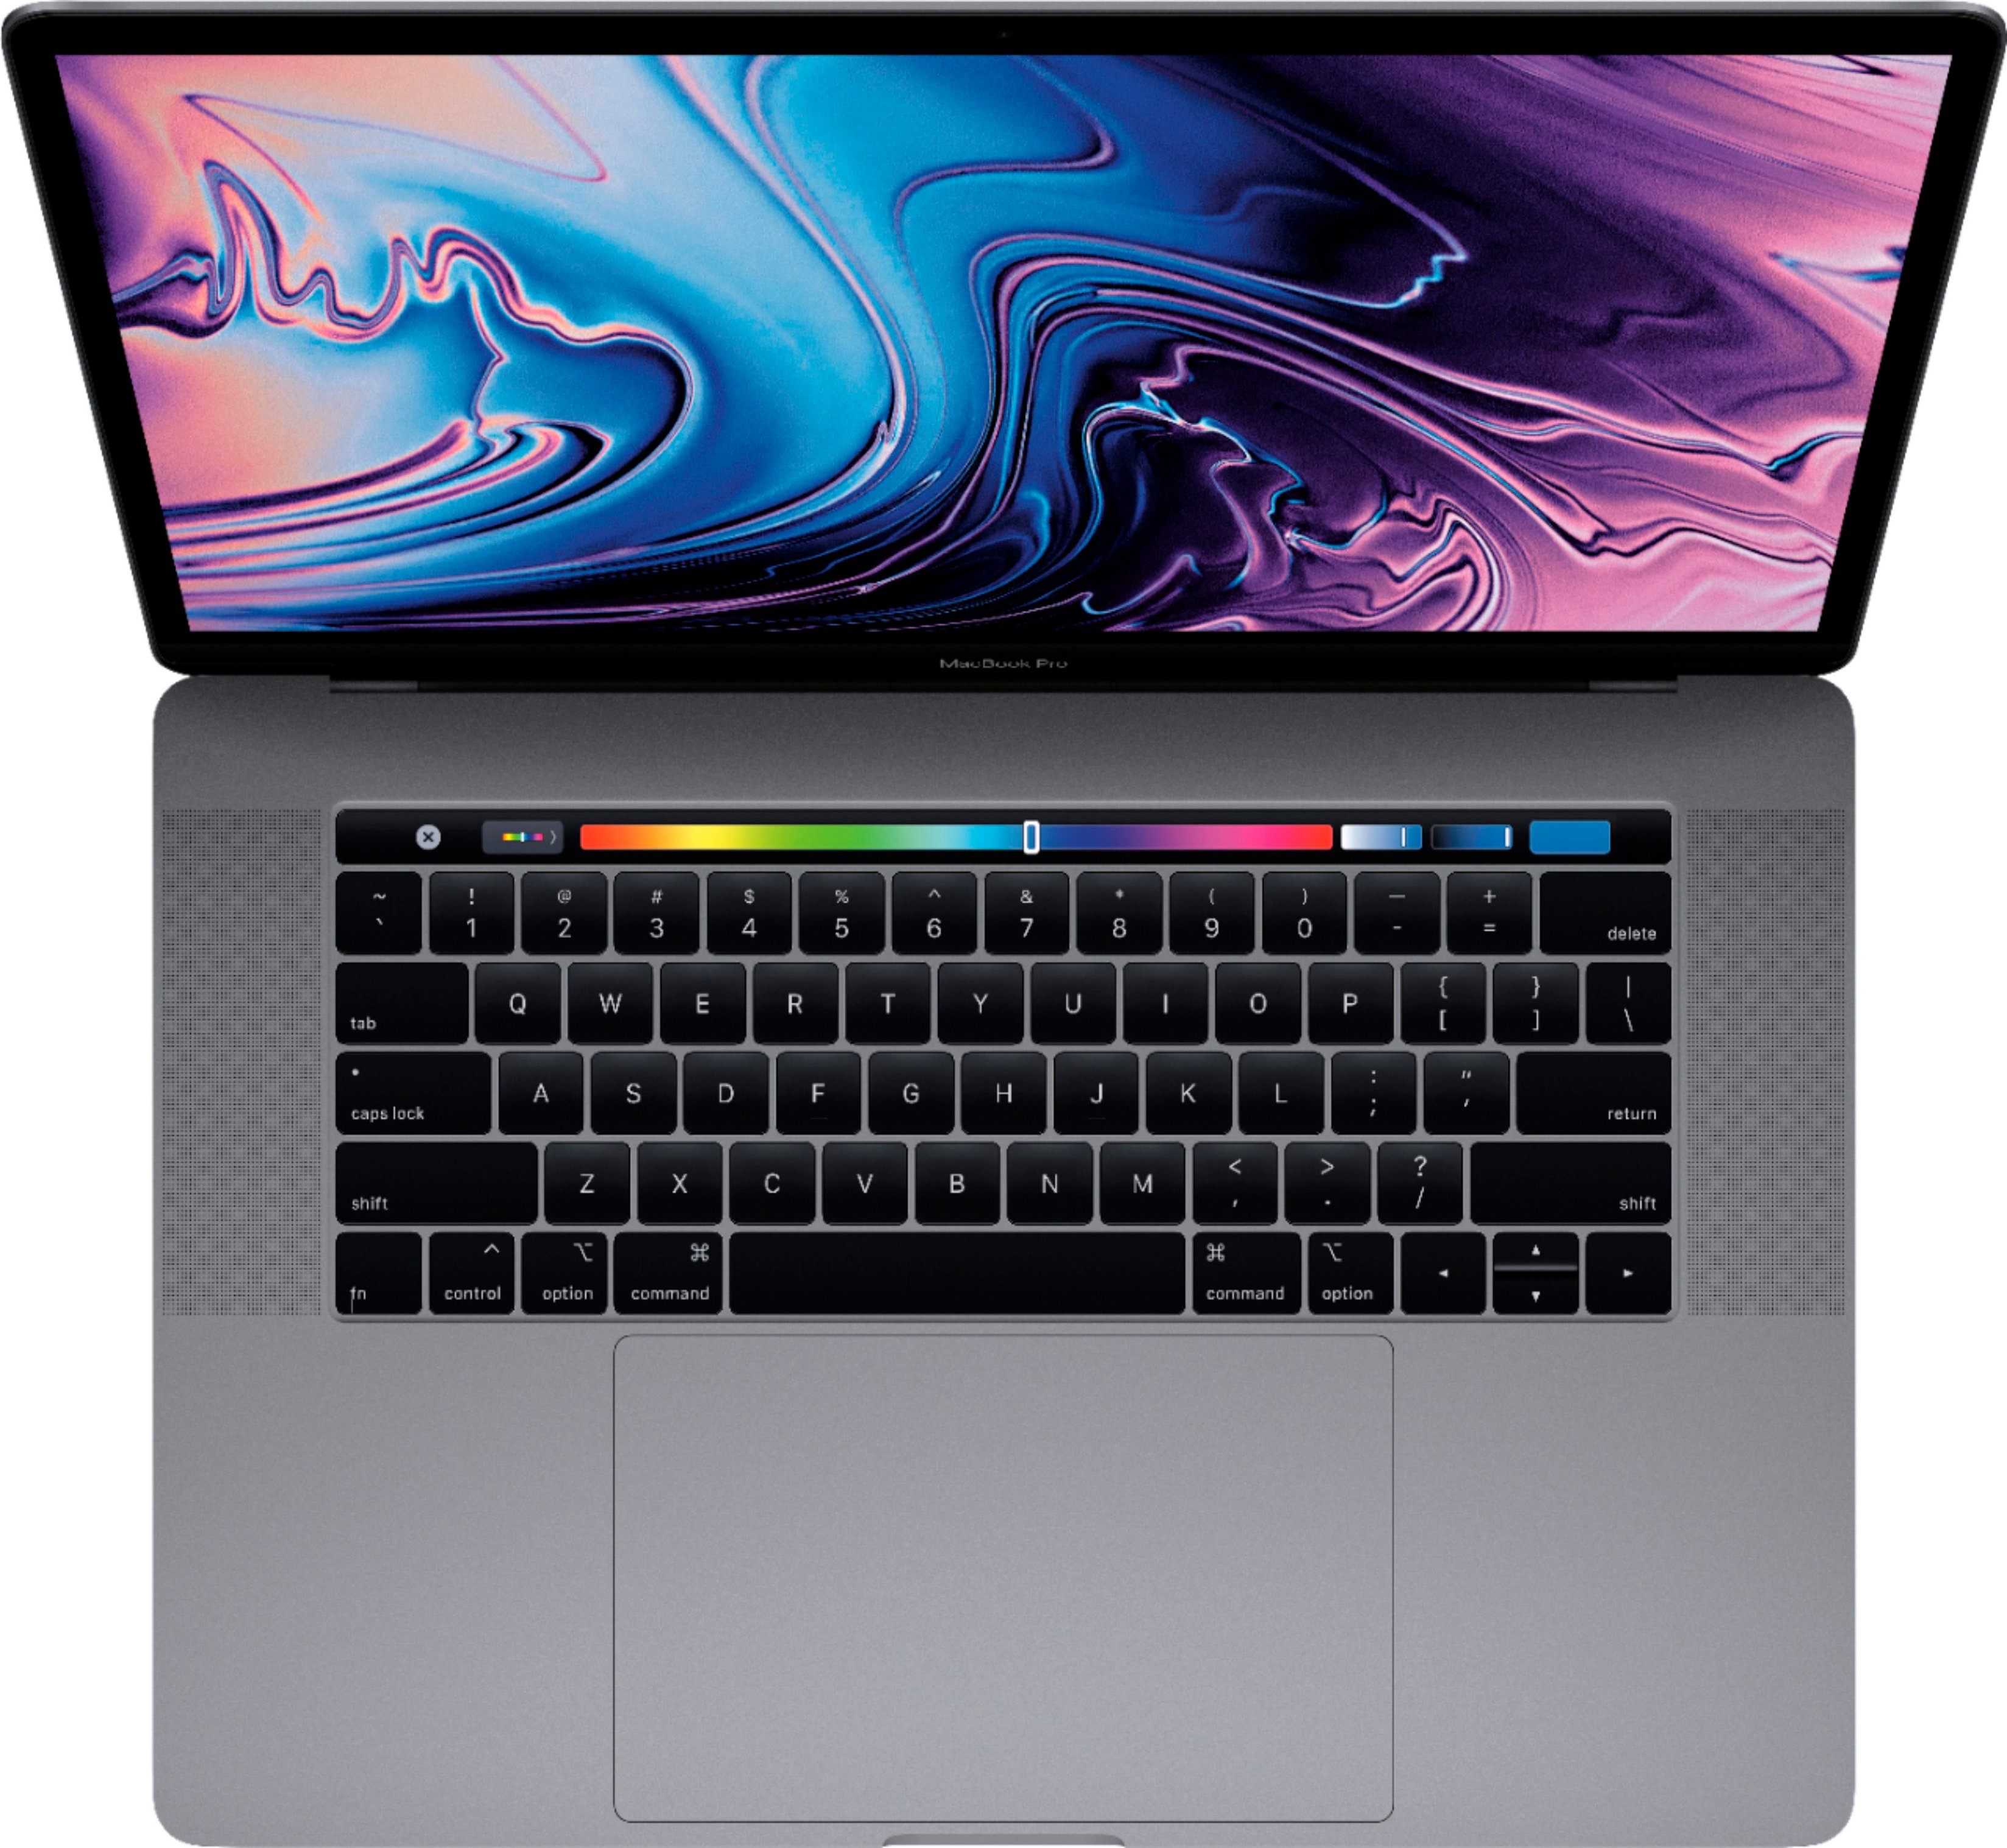 Apple MacBook Pro 15" Display with Touch Bar Intel Core i7 16GB Memory AMD Radeon Pro SSD Gray GSRF MR932LL/A - Best Buy